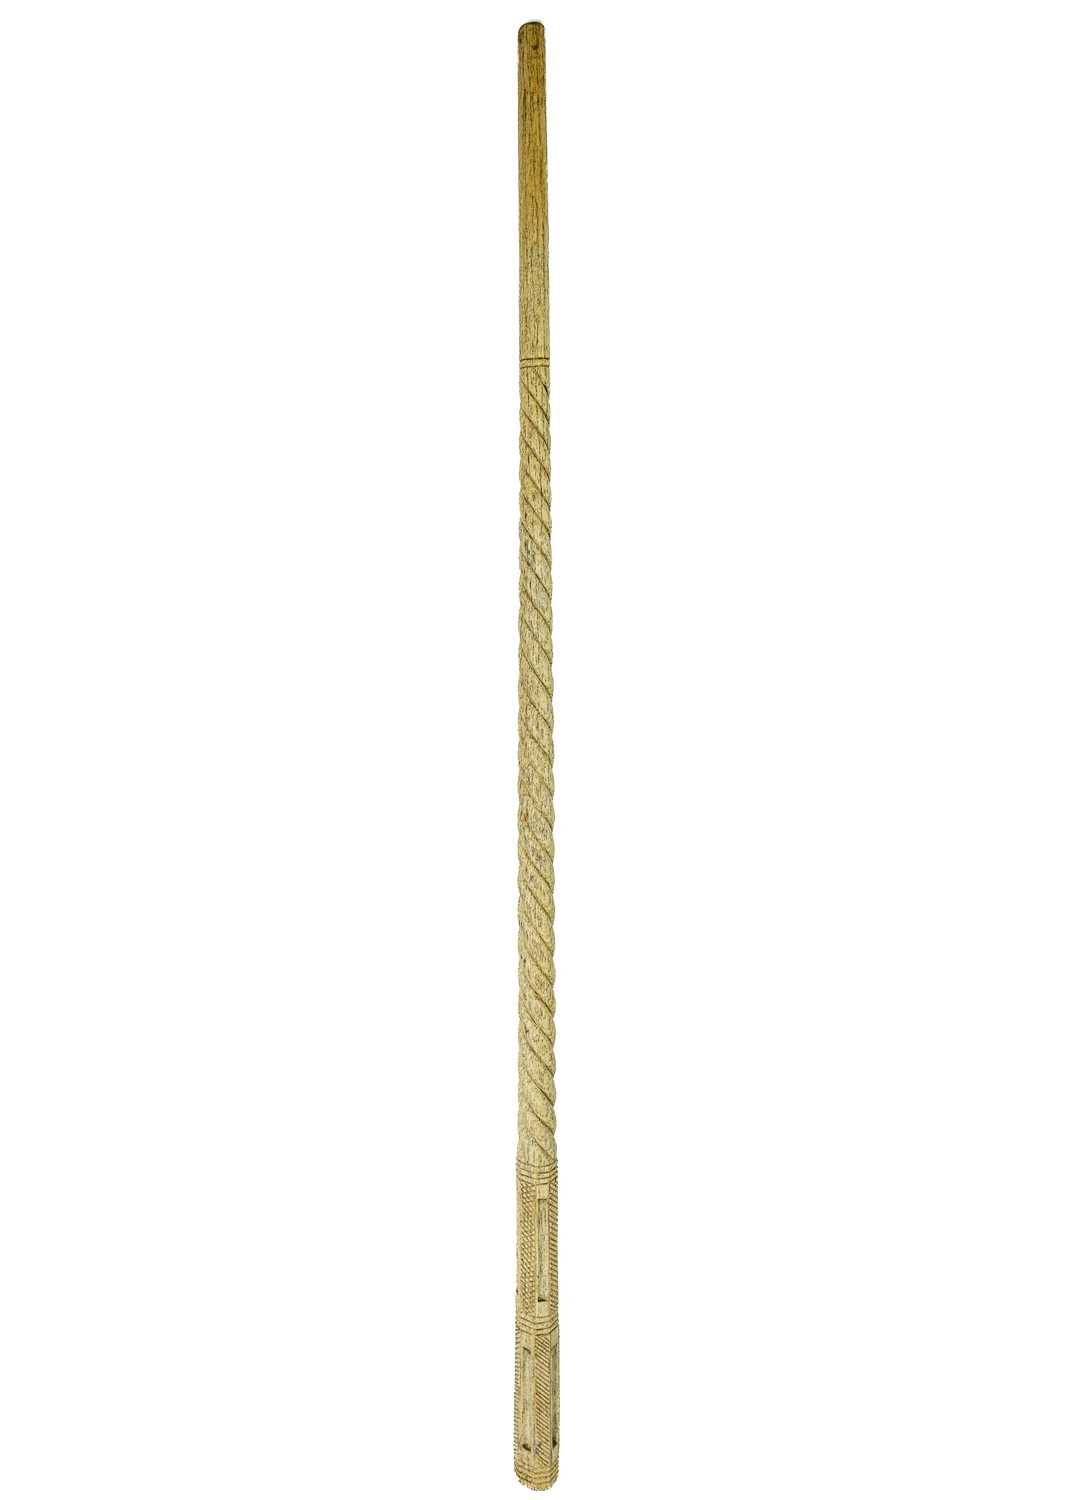 A 19th century whale bone walking stick. - Image 6 of 6